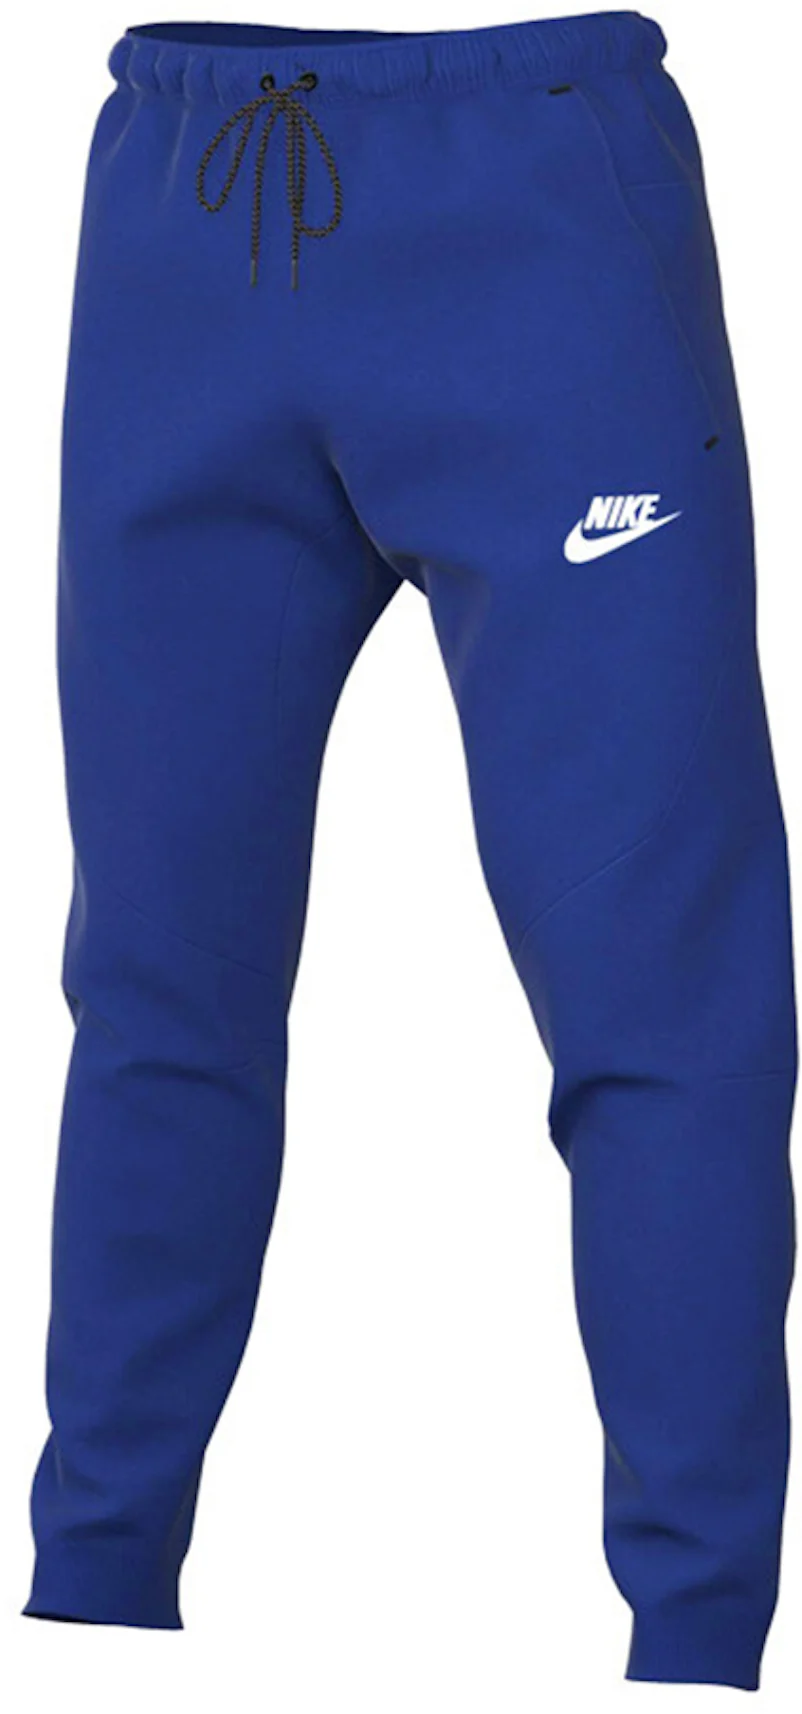 https://images.stockx.com/images/Nike-Tech-Fleece-Joggers-Deep-Royal-Blue-White.jpg?fit=fill&bg=FFFFFF&w=1200&h=857&fm=webp&auto=compress&dpr=2&trim=color&updated_at=1683750517&q=60